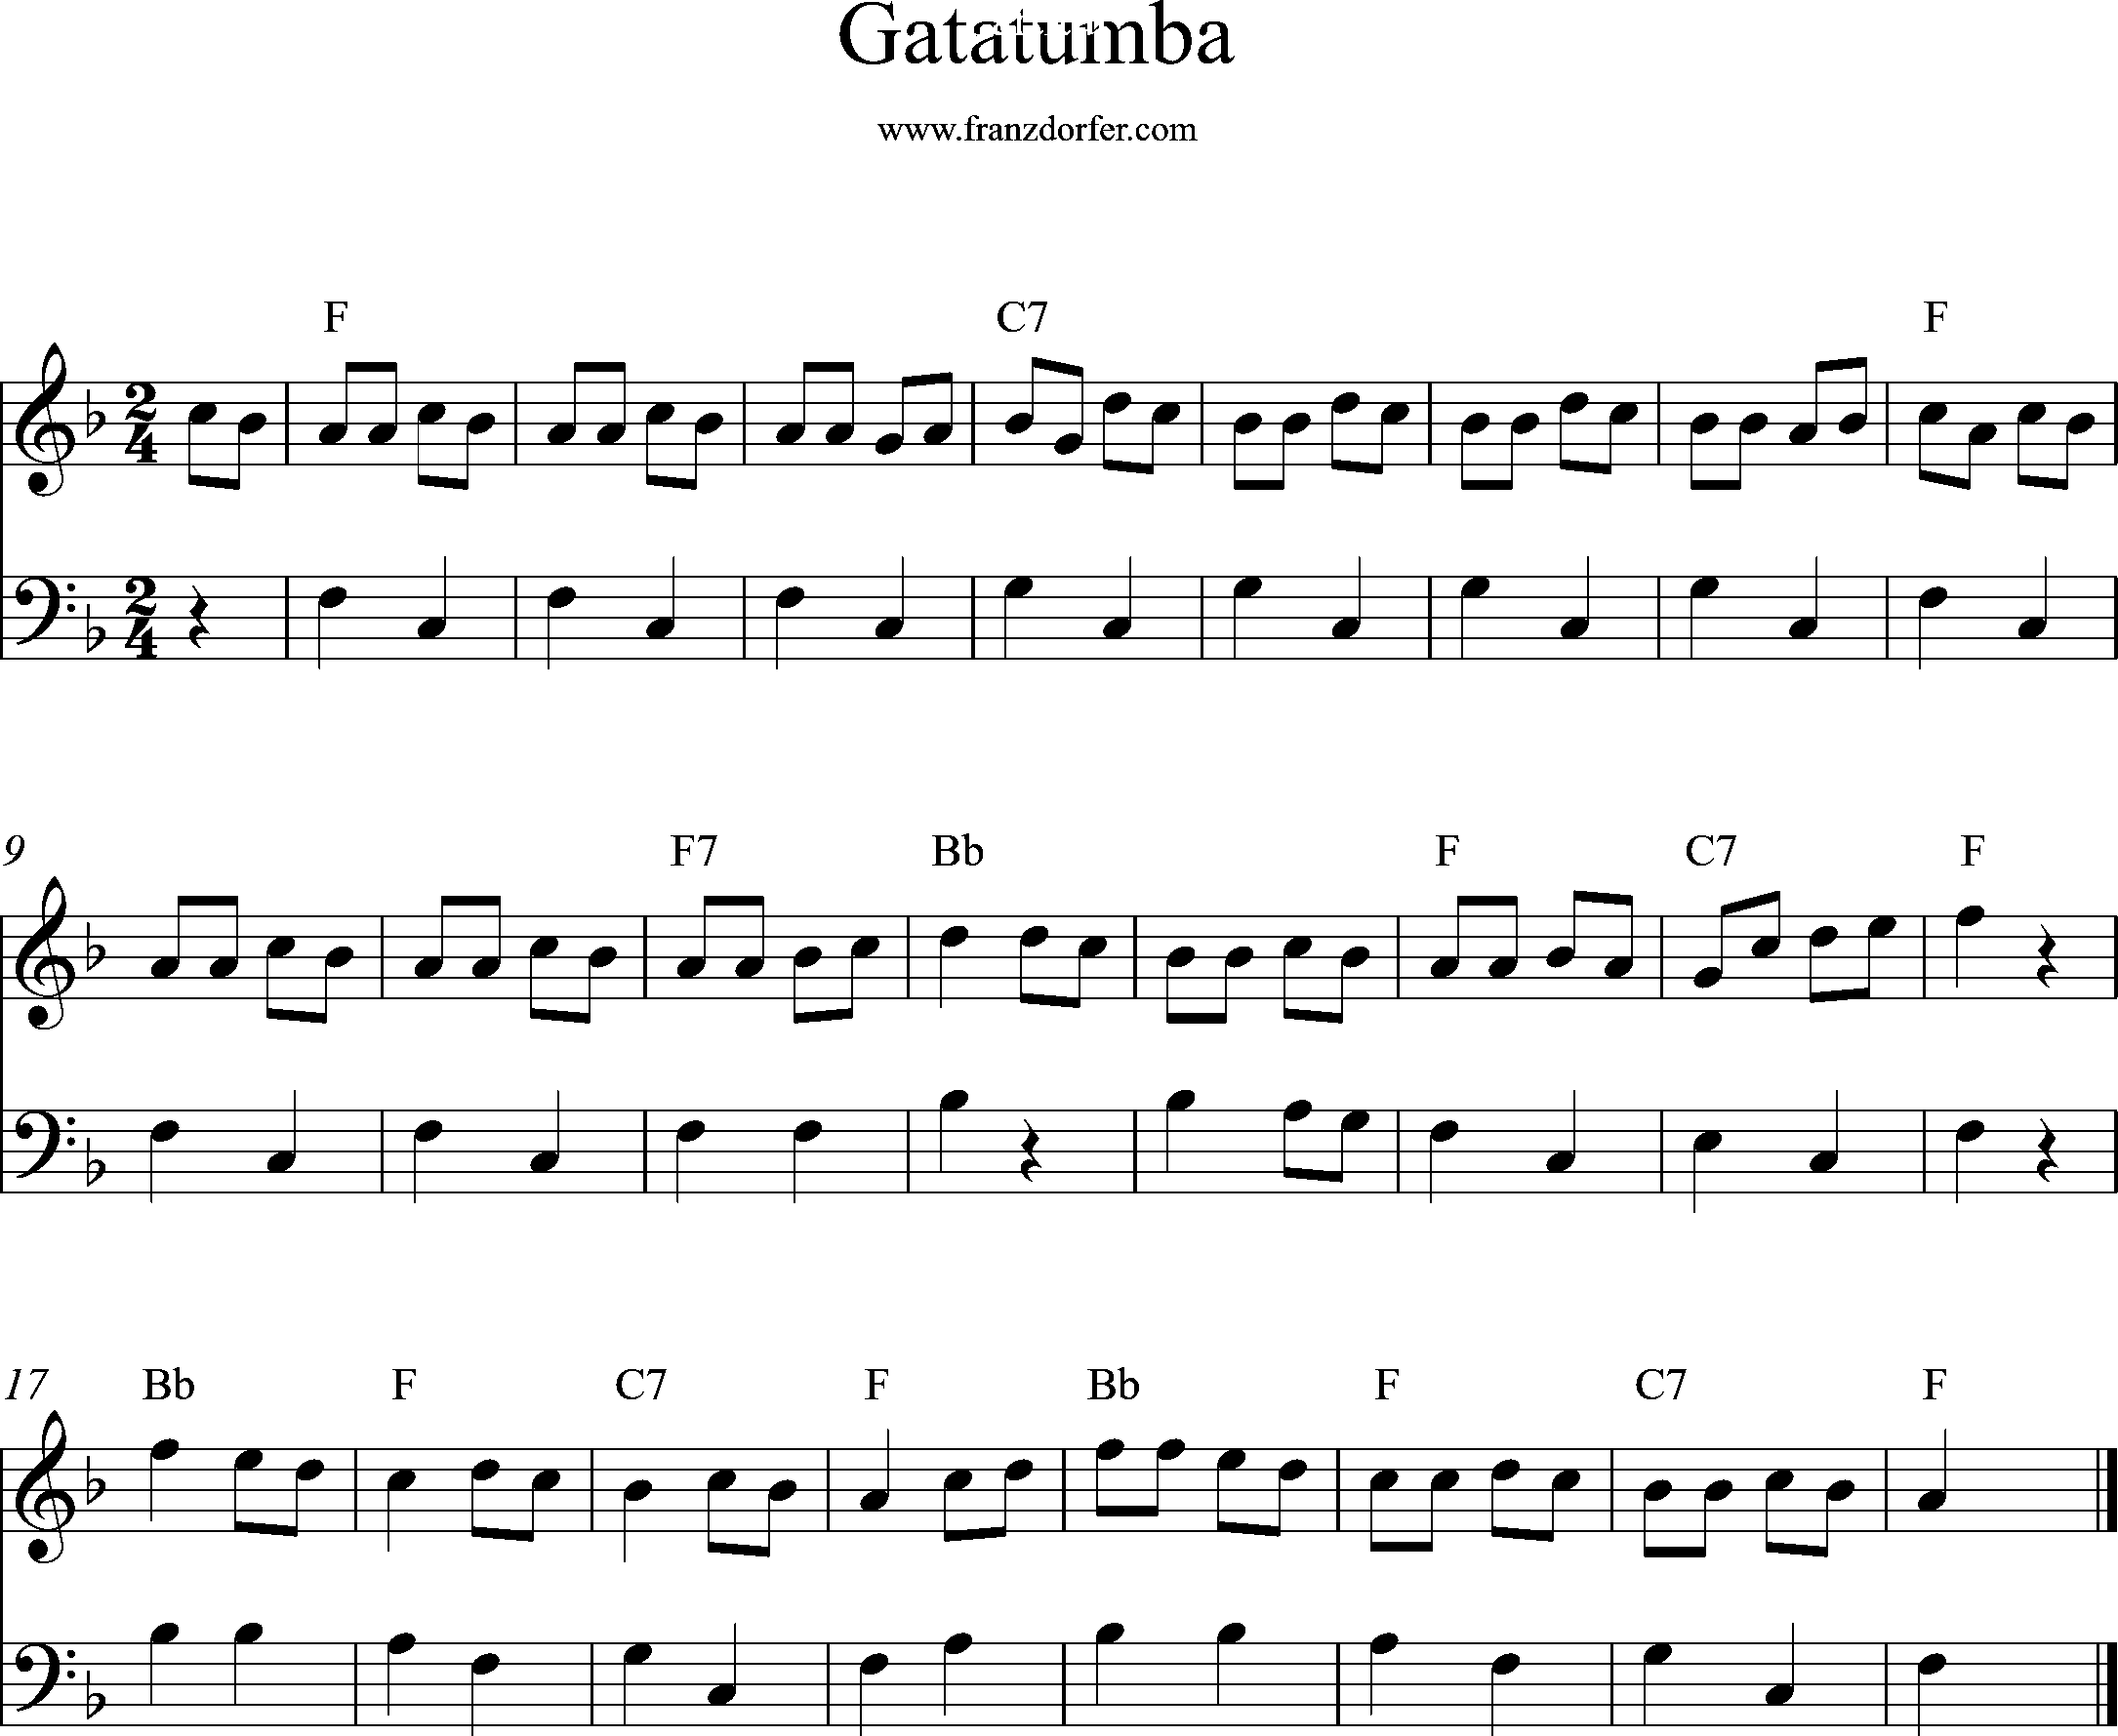 Piano Sheetmusic, F-Major, Gatatumba